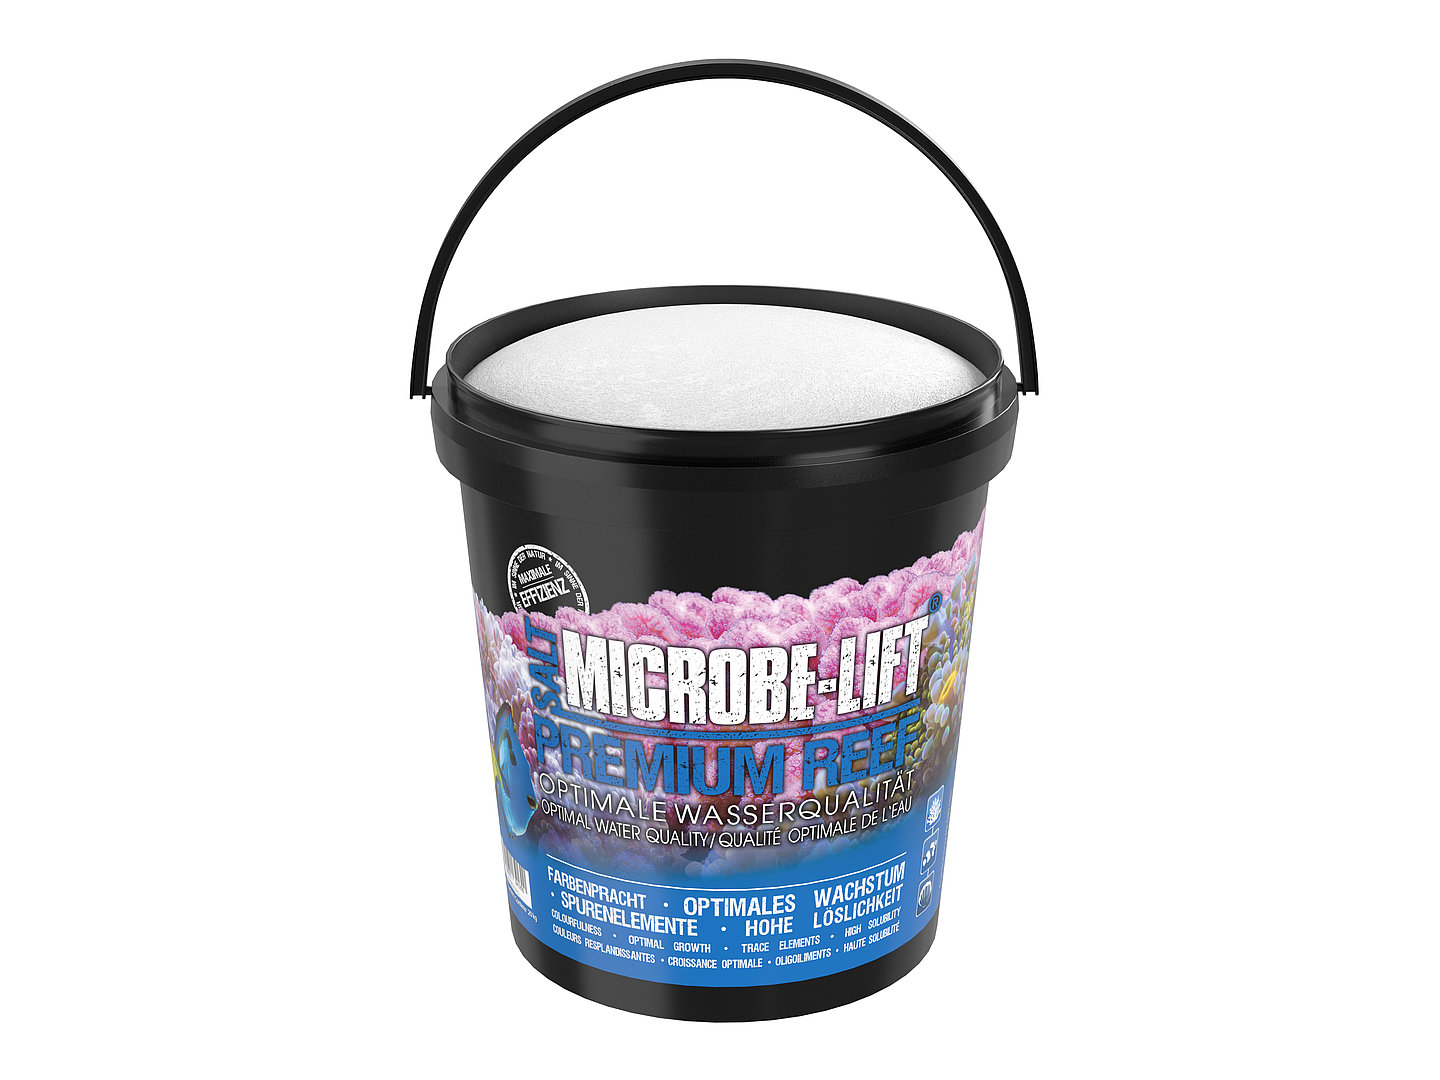 Microbe-Lift Premium Reef Salt 10kg